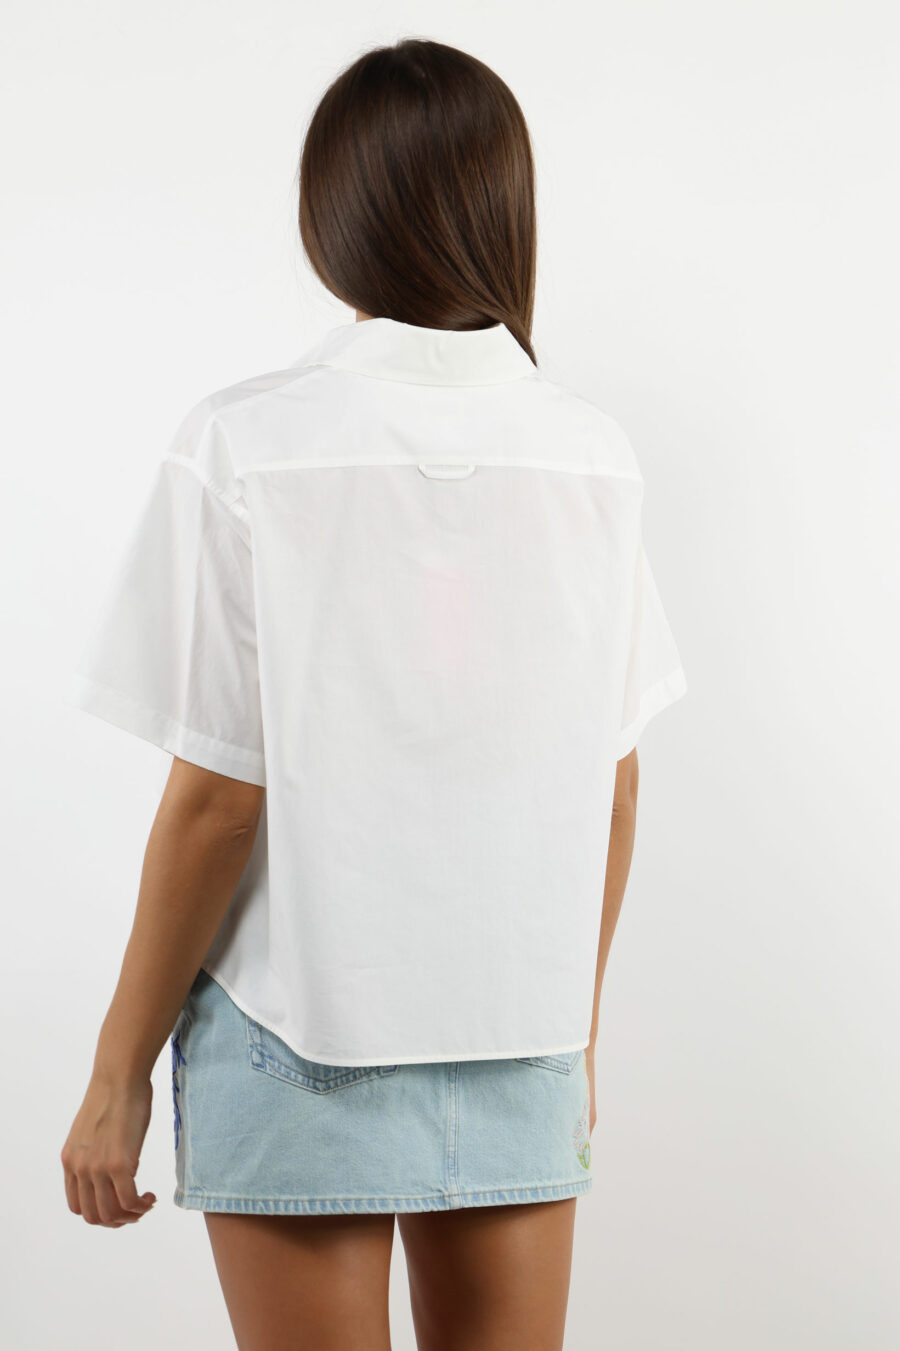 Camisa branca de manga curta com mini logótipo "boke flower" preto - 109578